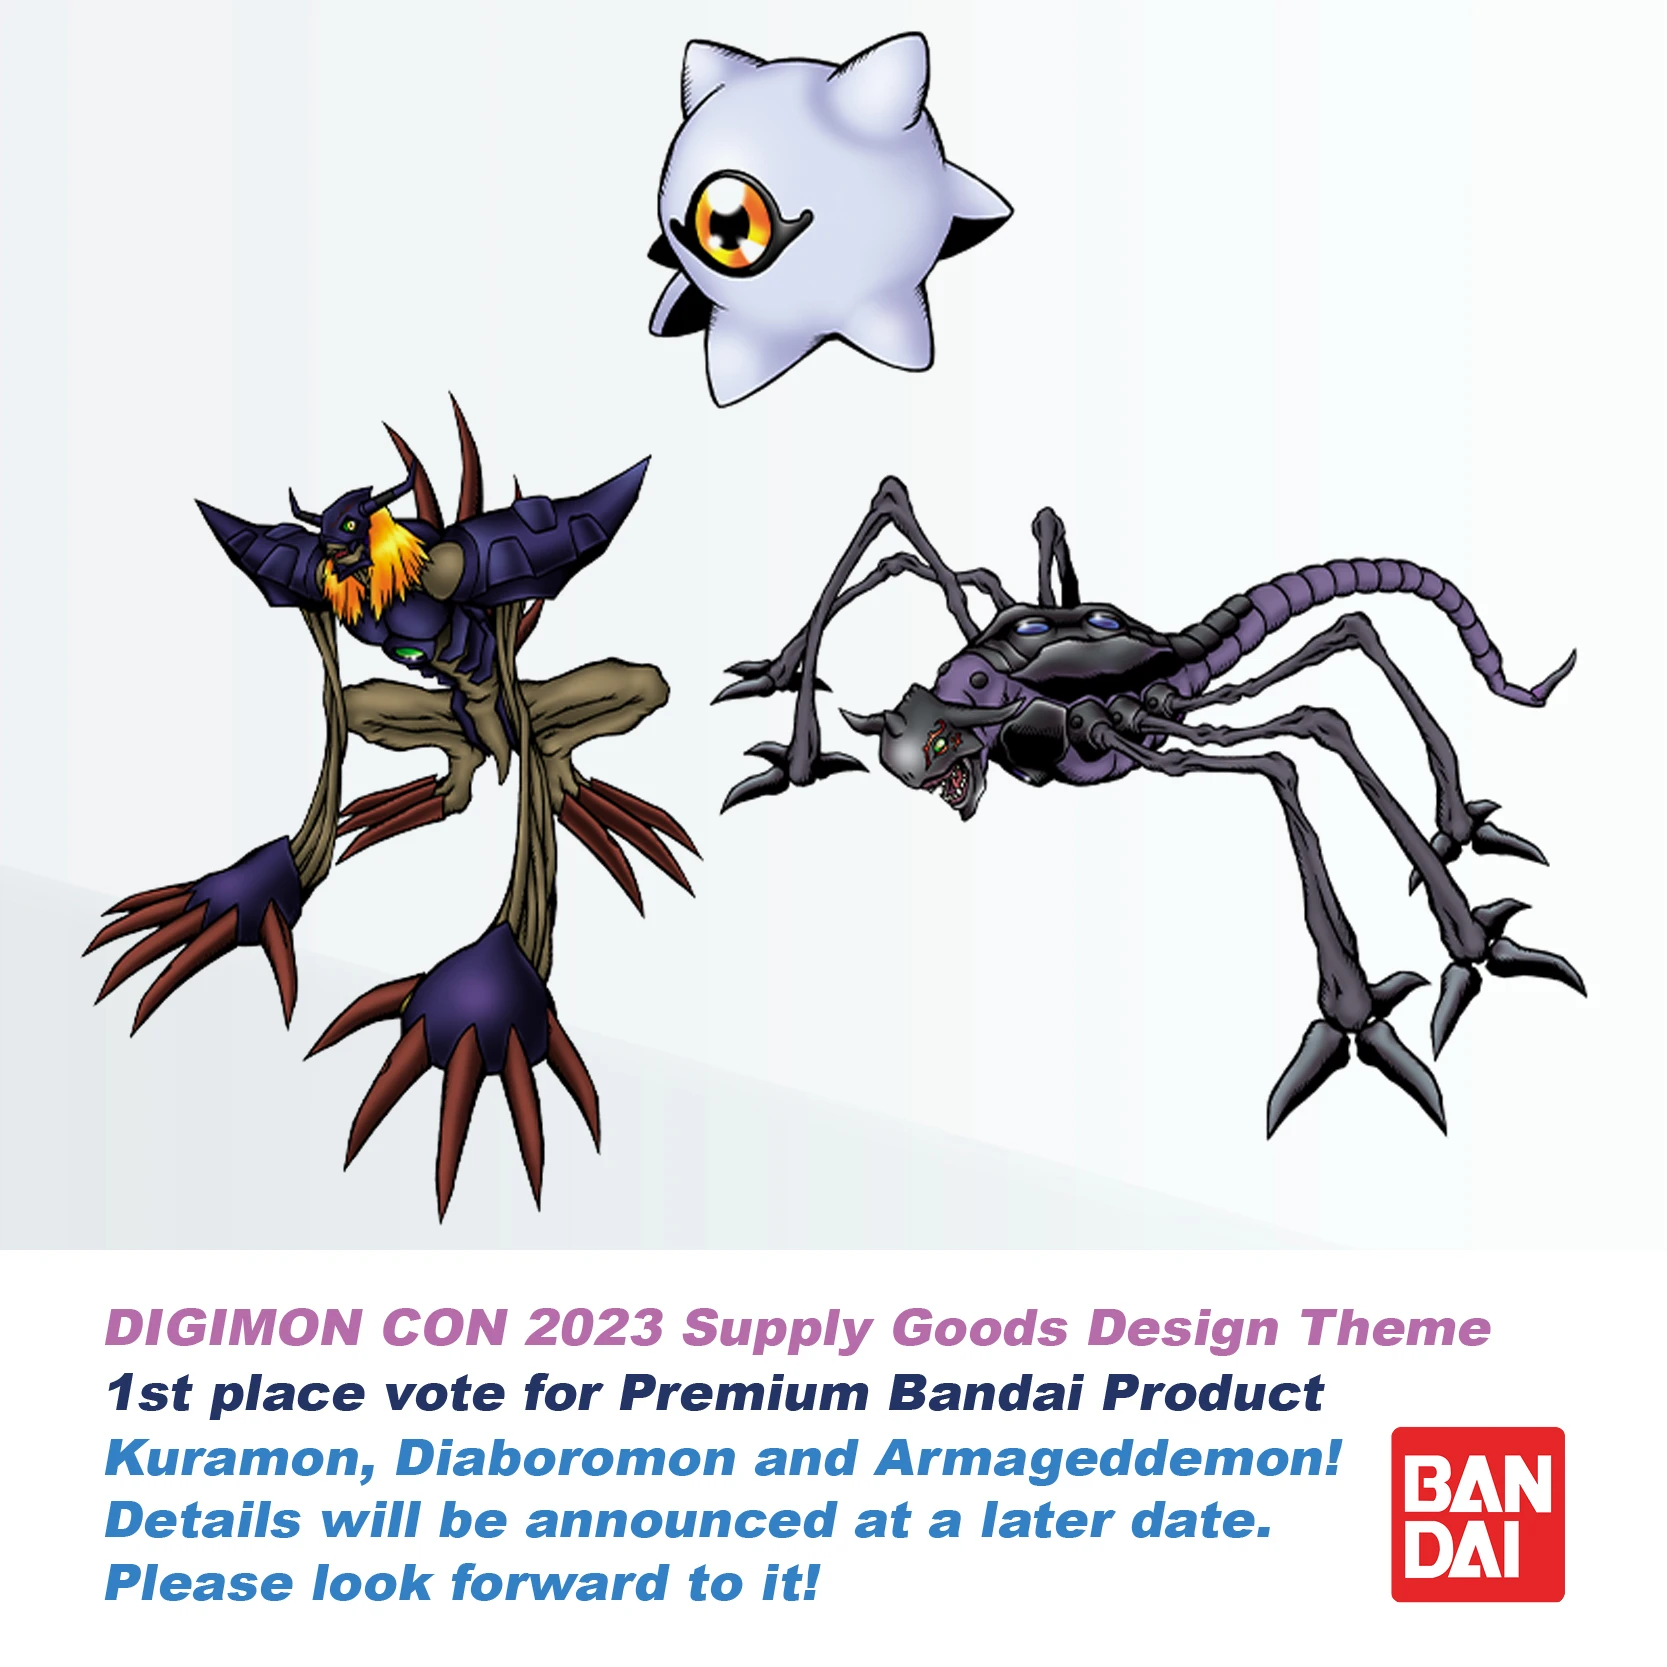 Kuramon, Diaboromon und Armageddemon Digimon Concept Art